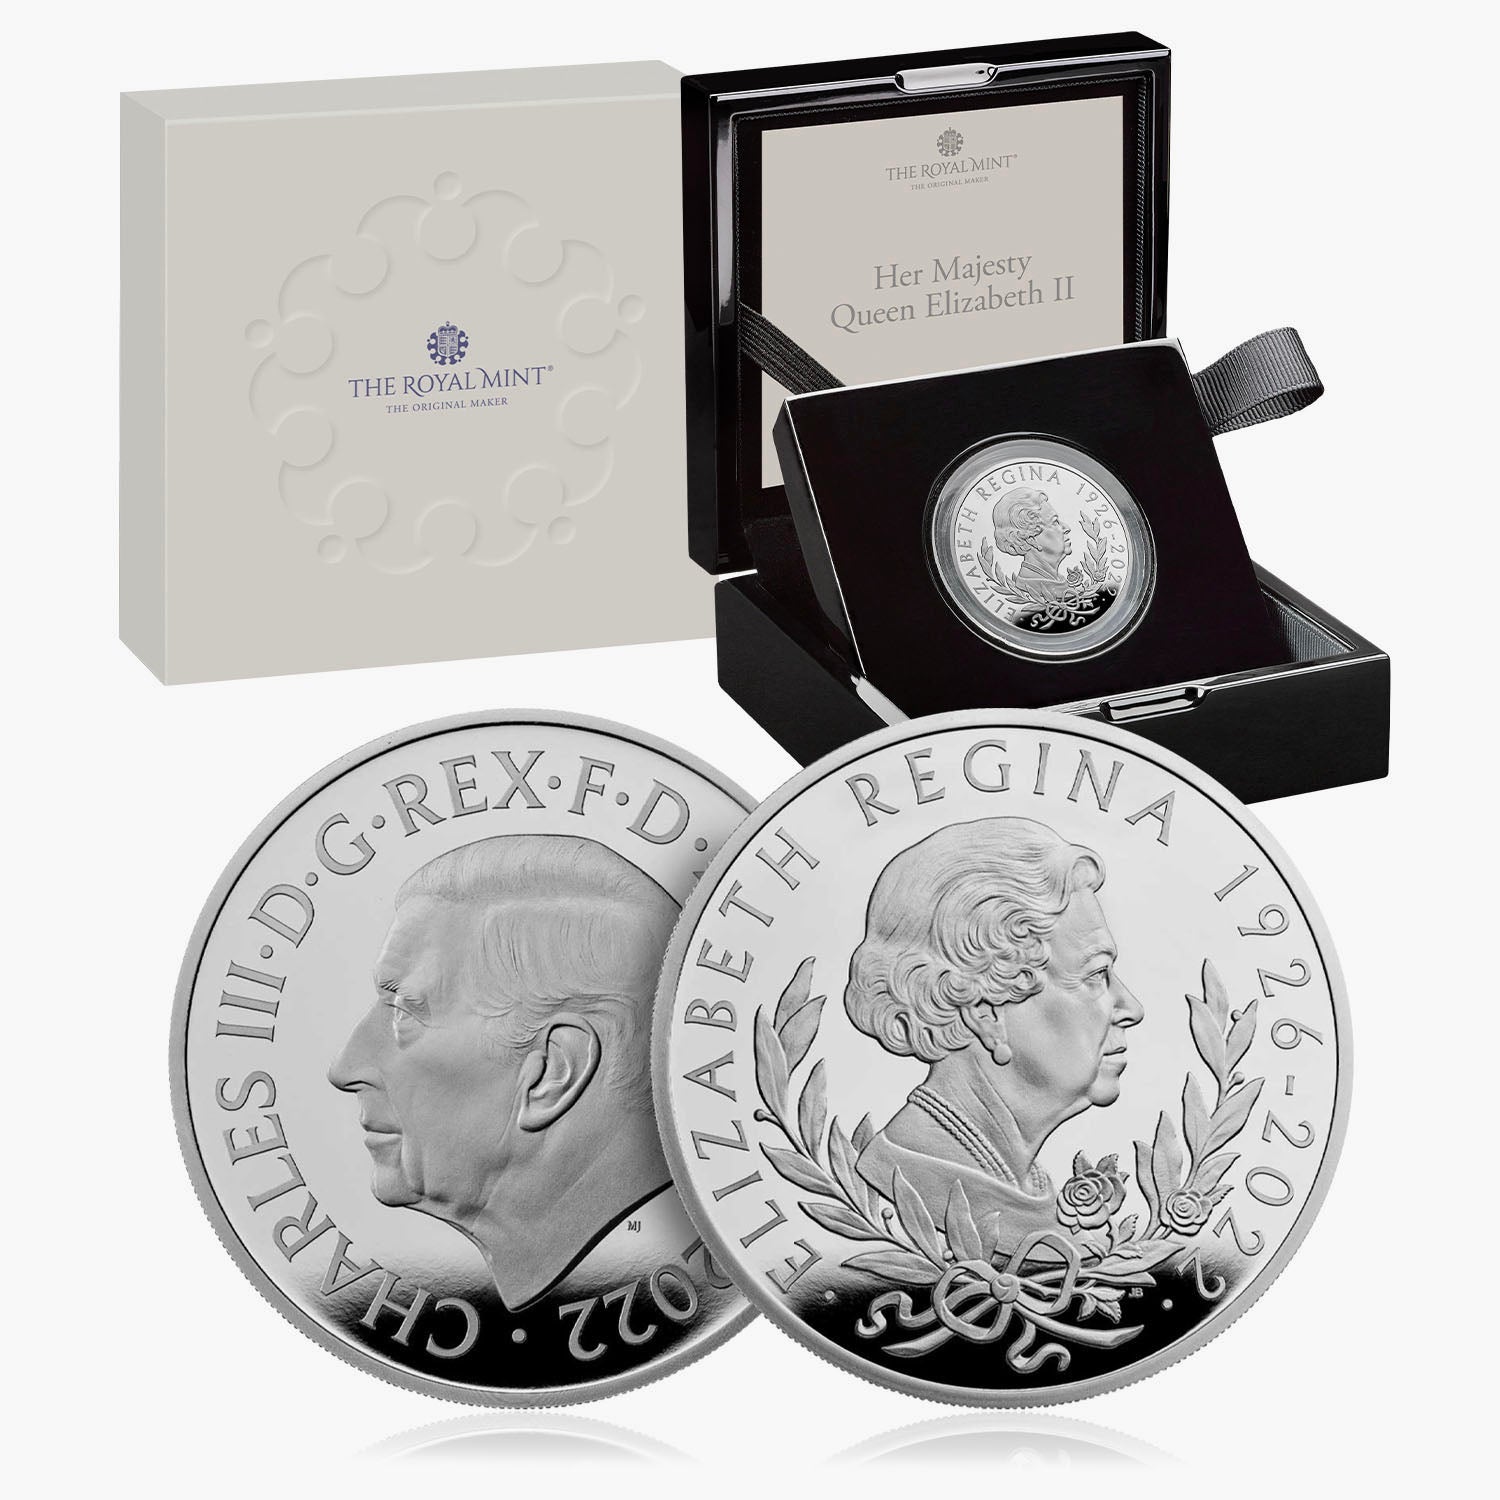 Her Majesty Queen Elizabeth II 2022 10oz Silver Proof Coin